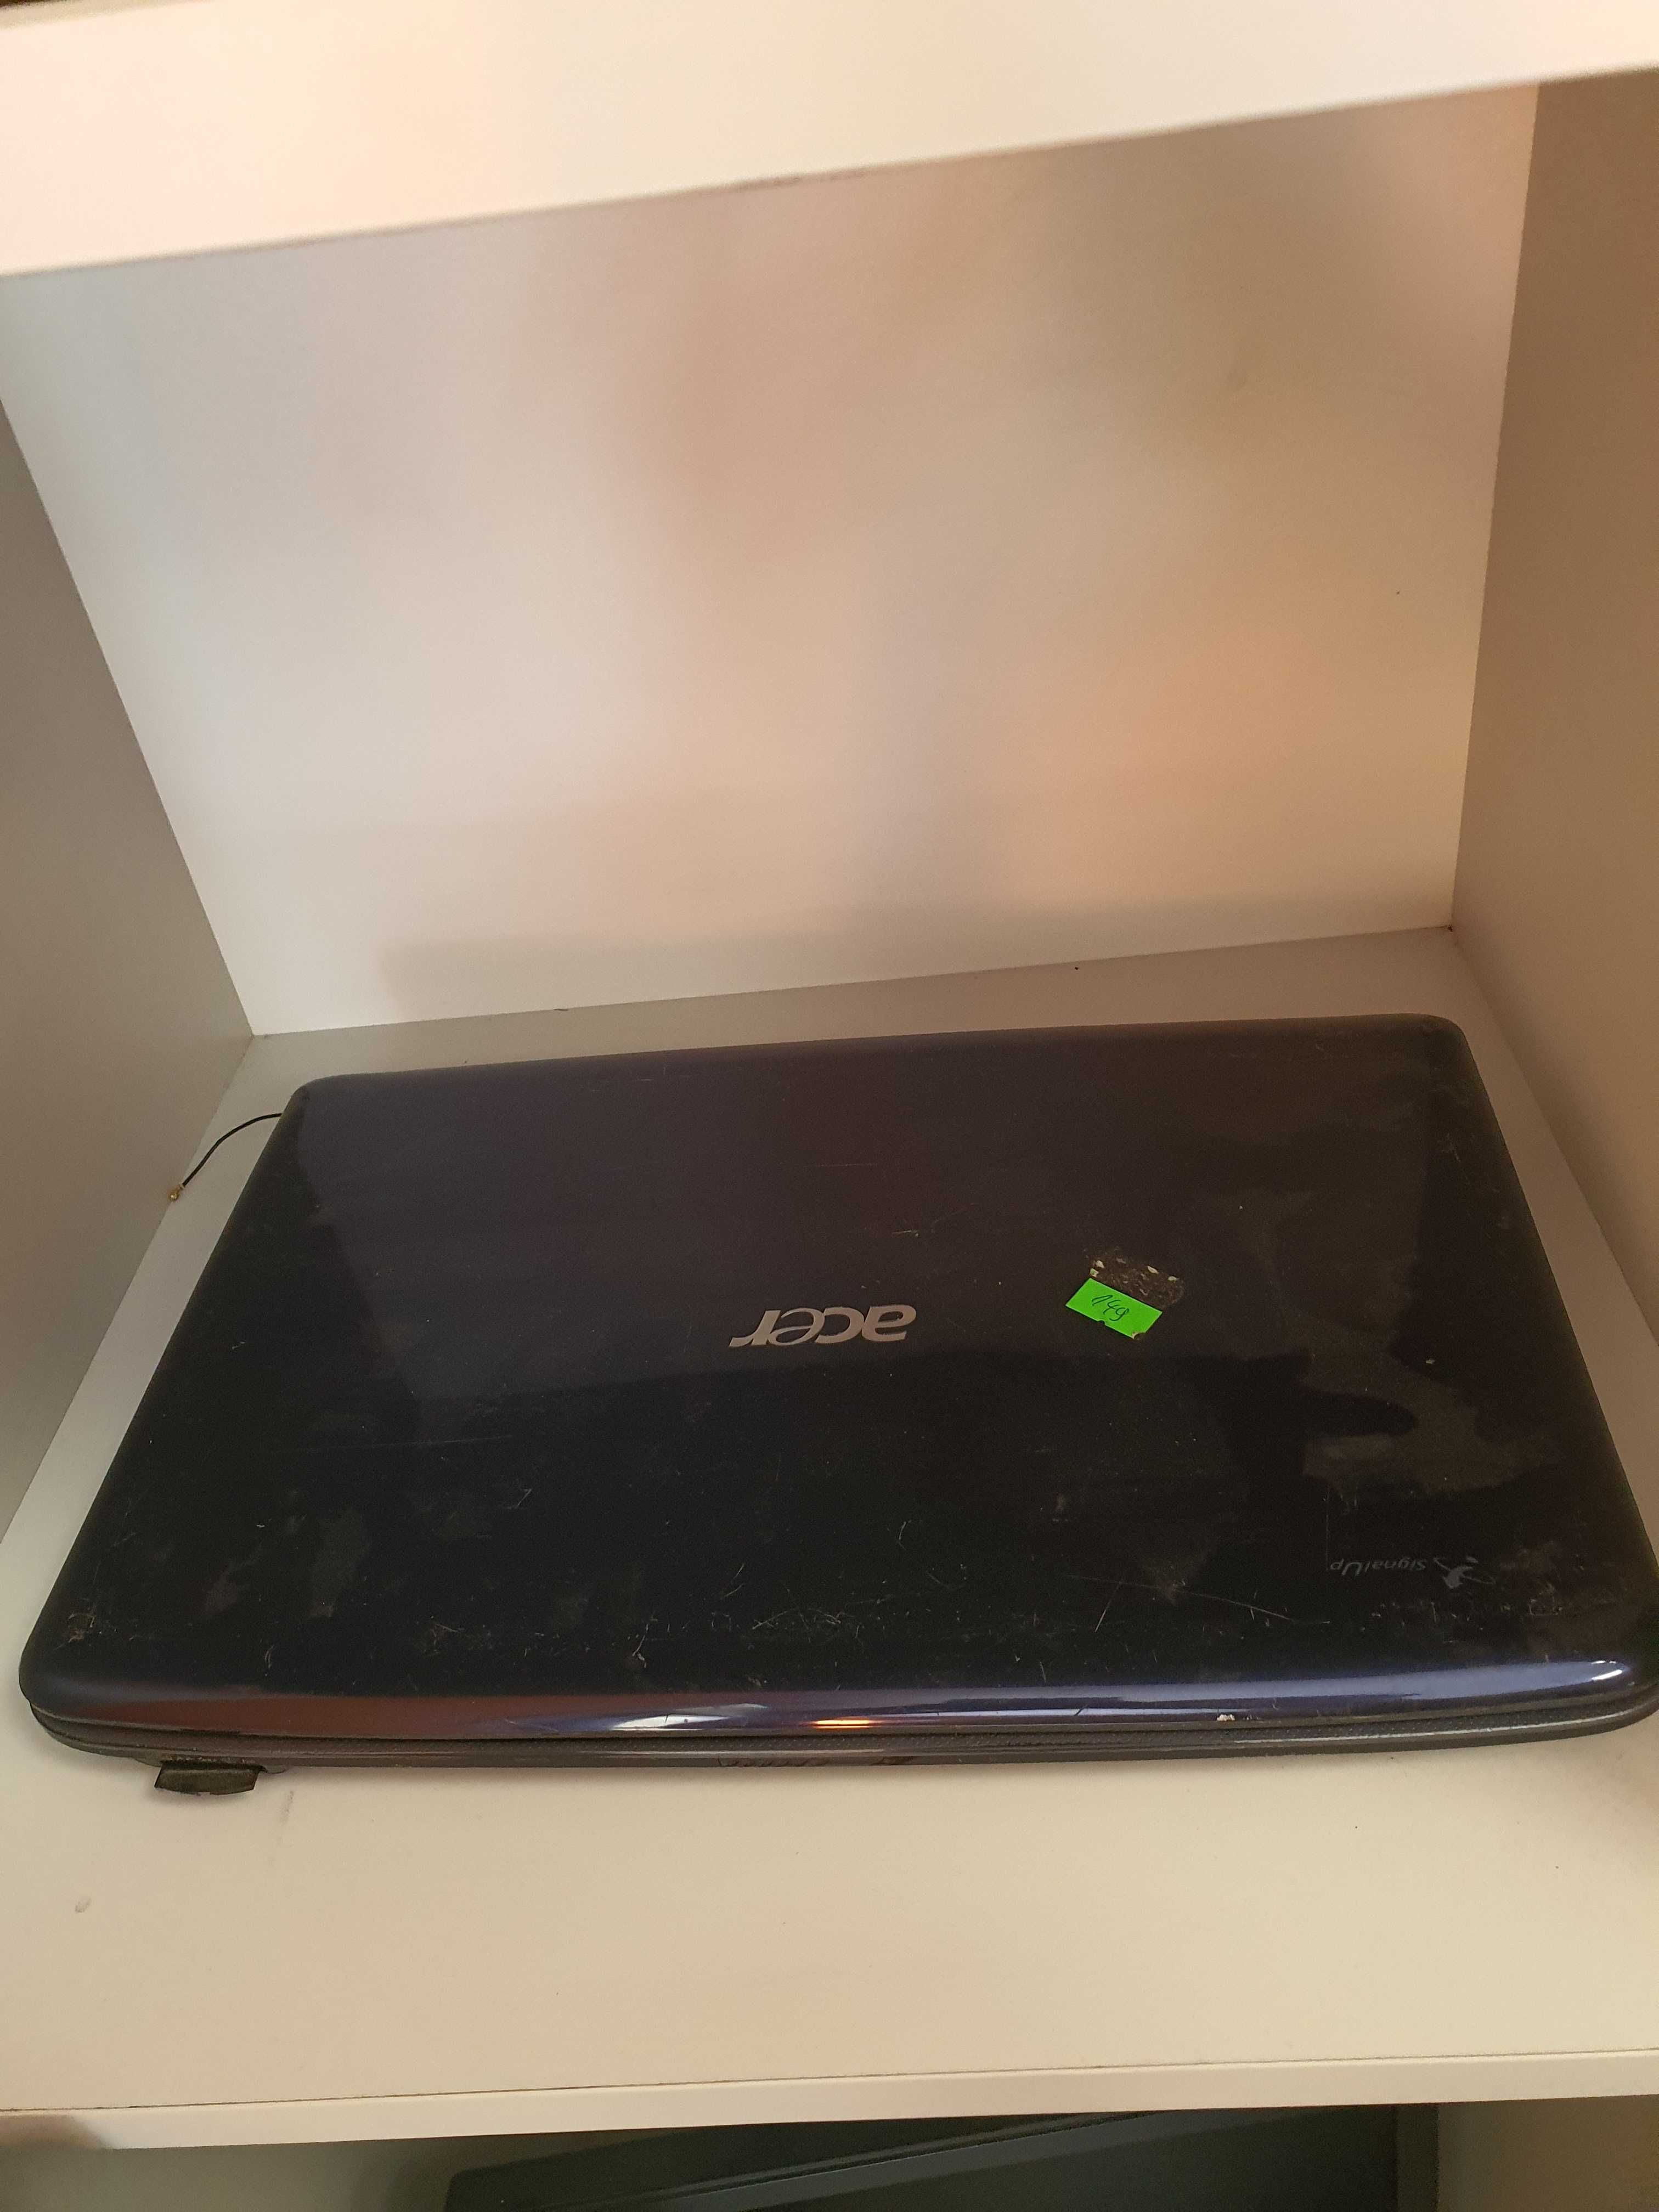 Laptop Acer Aspire 5738